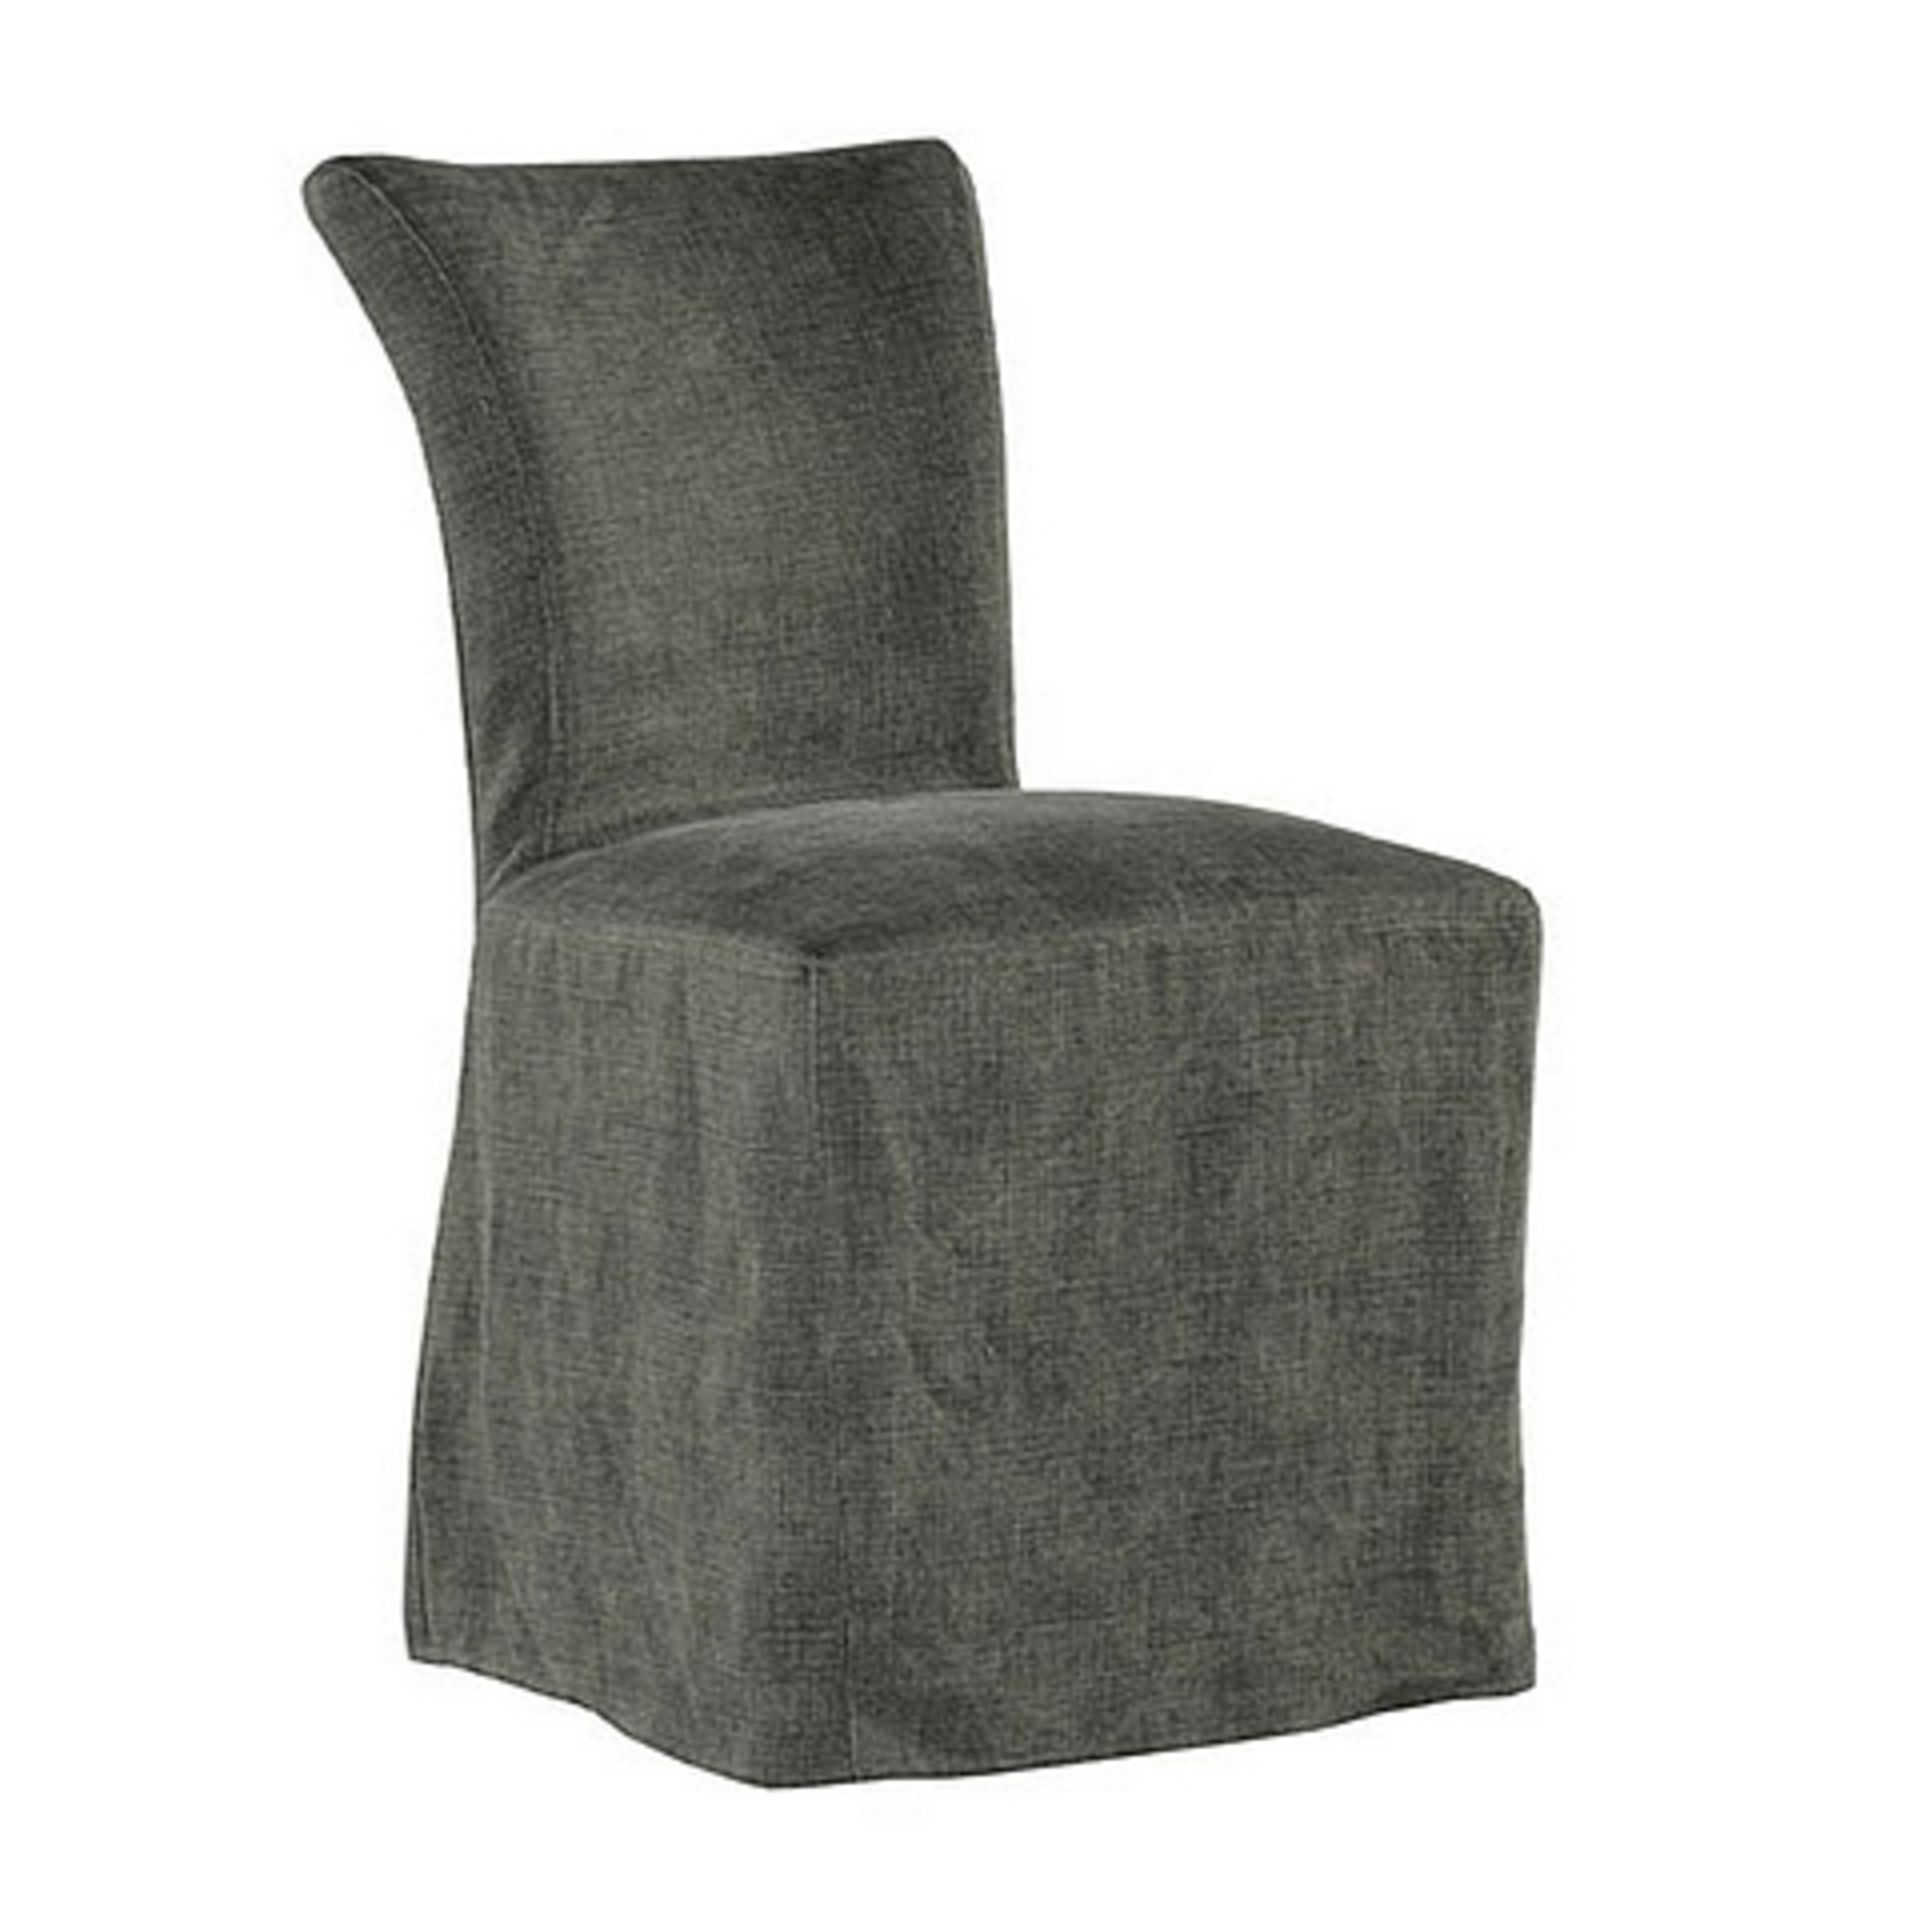 Mimi Loose Cover Dining Chair Scuff Linen Gorse 51 X 62 X 89cm